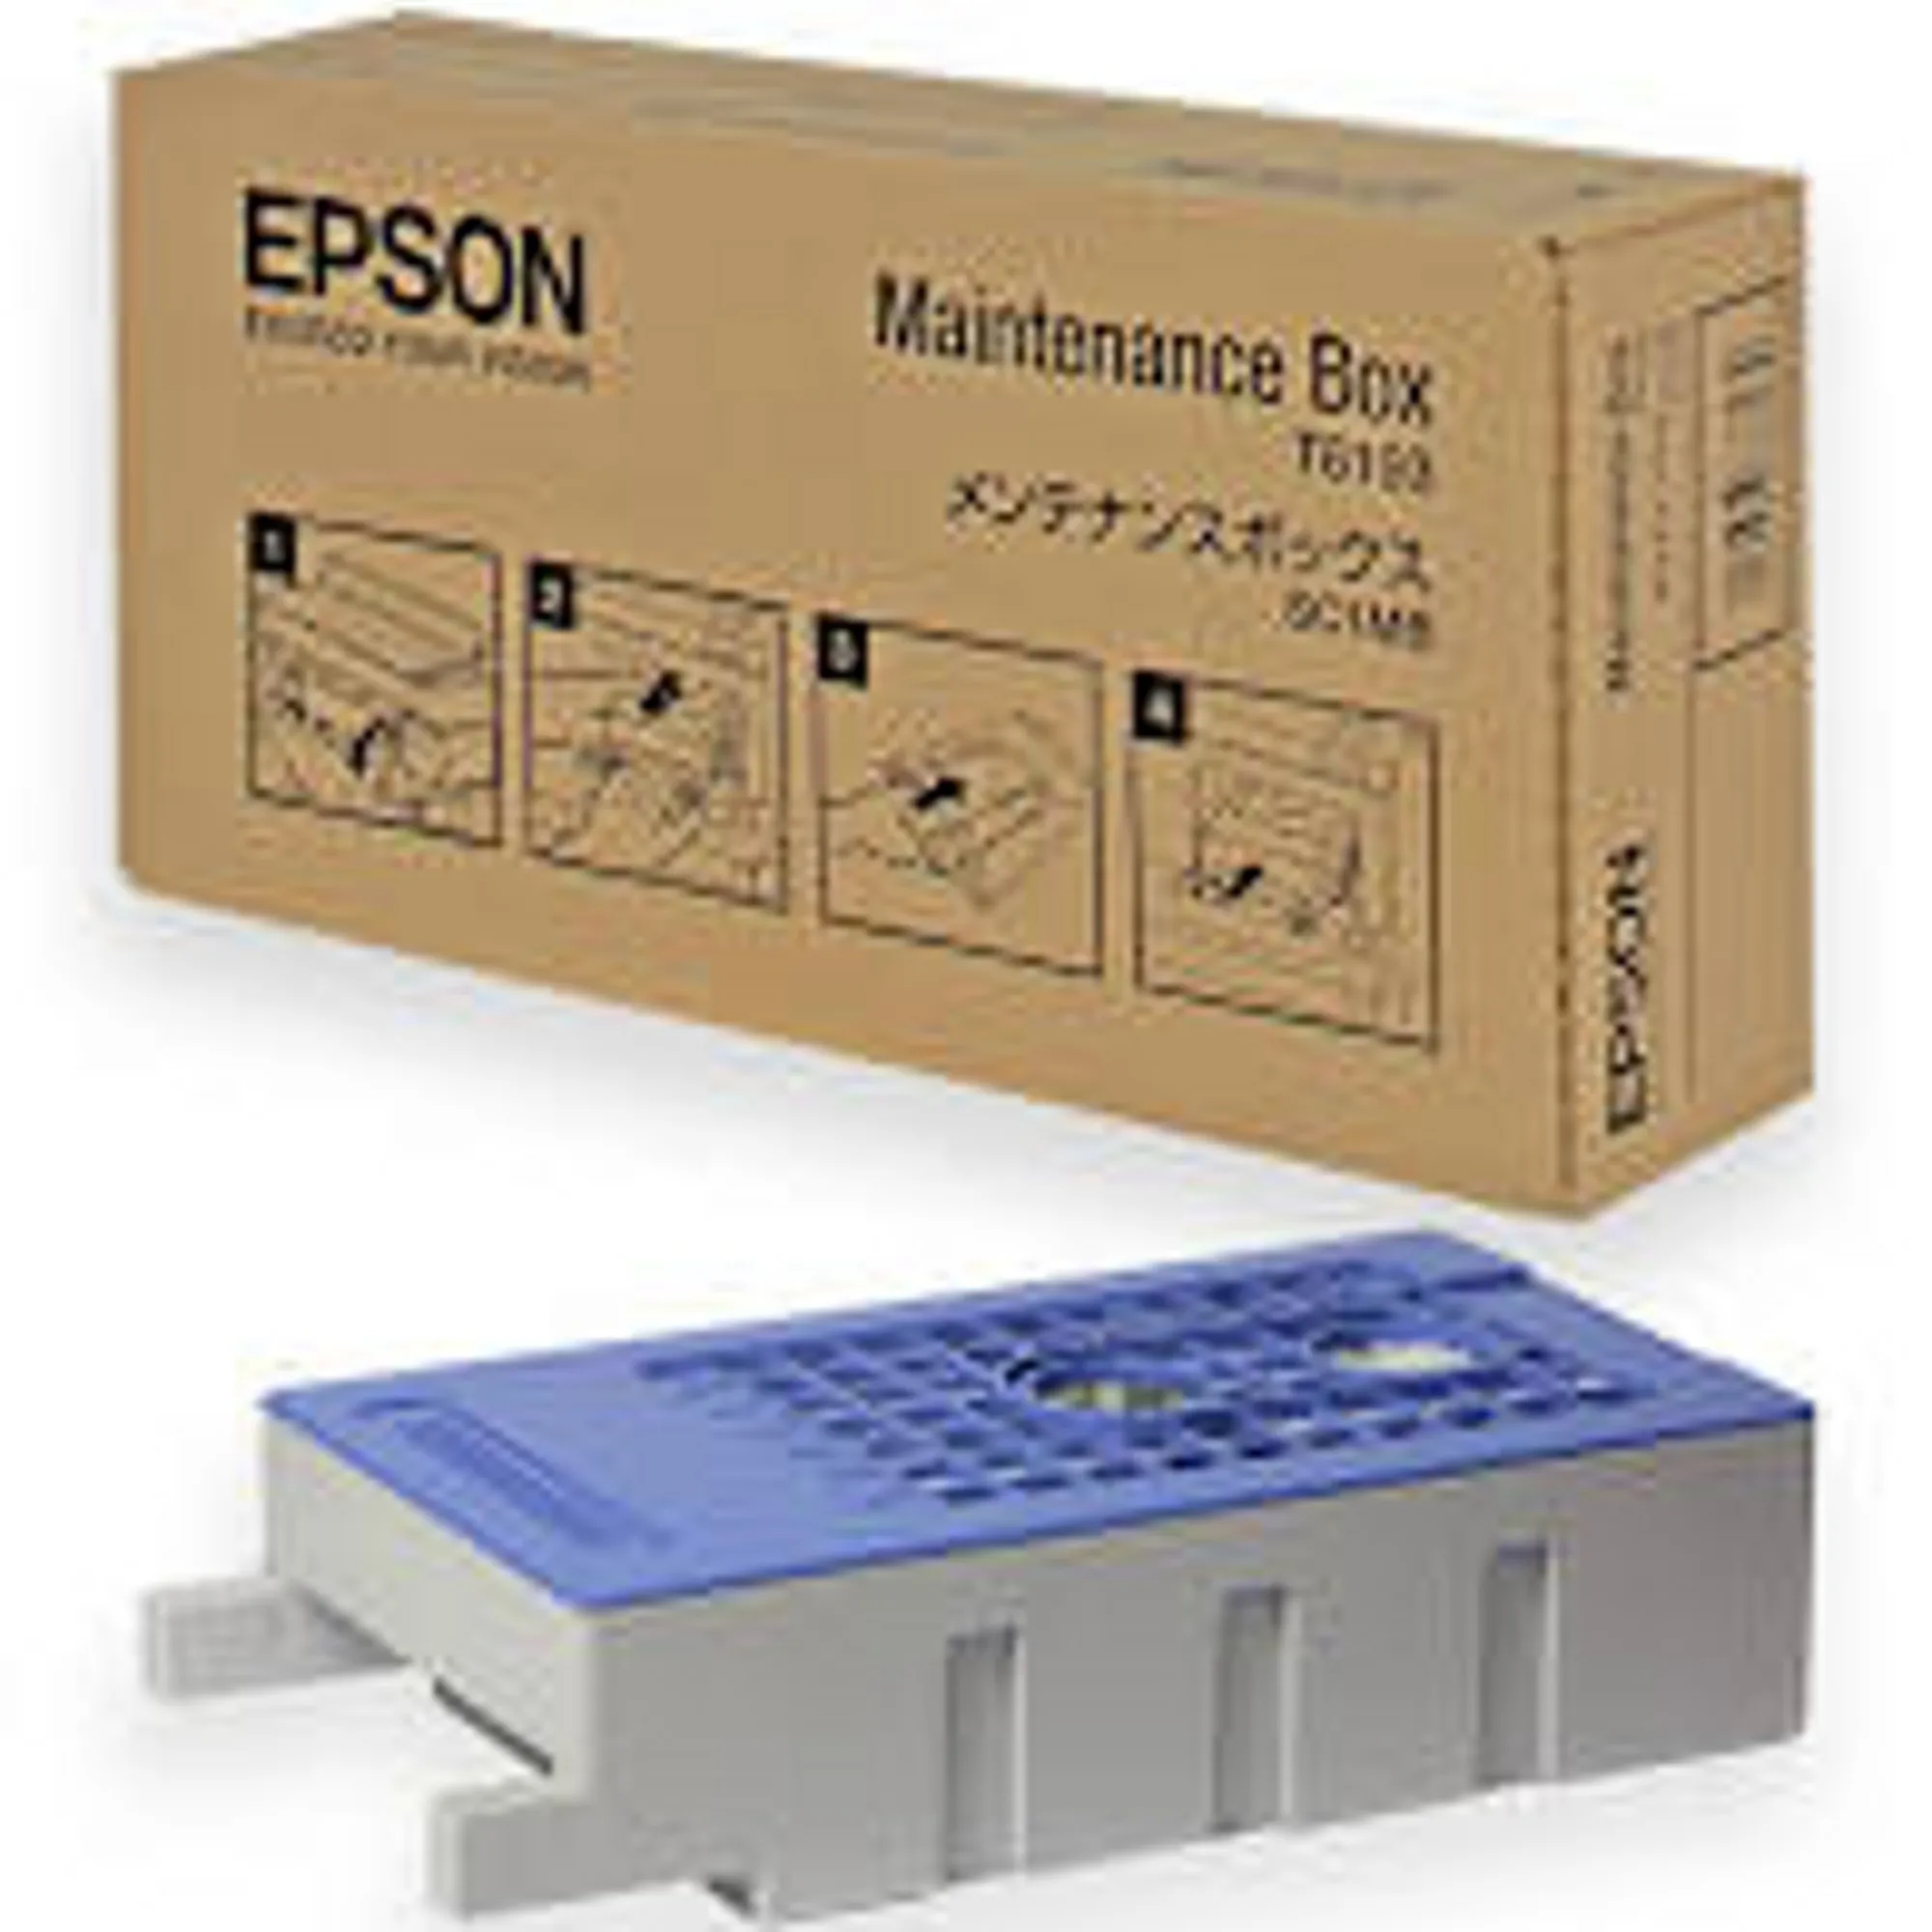 Epson Maintenance Box T619300